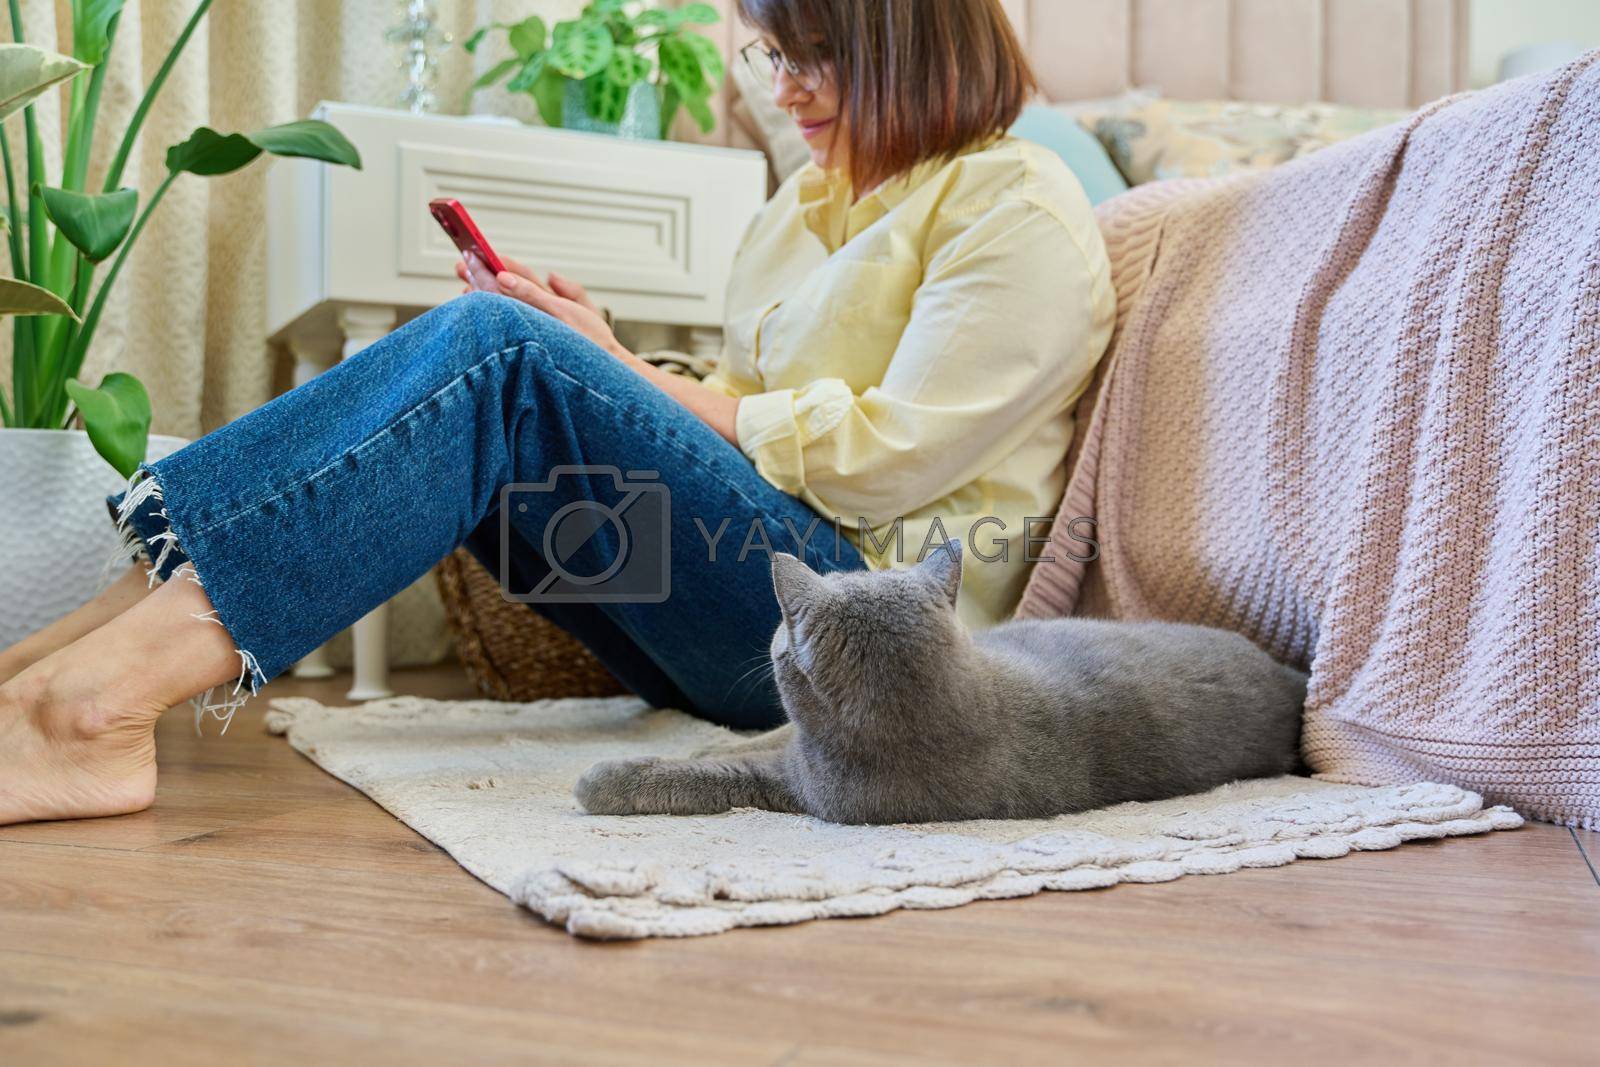 Royalty free image of Female sitting on floor using smartphone, pet cat sleeping near owner by VH-studio